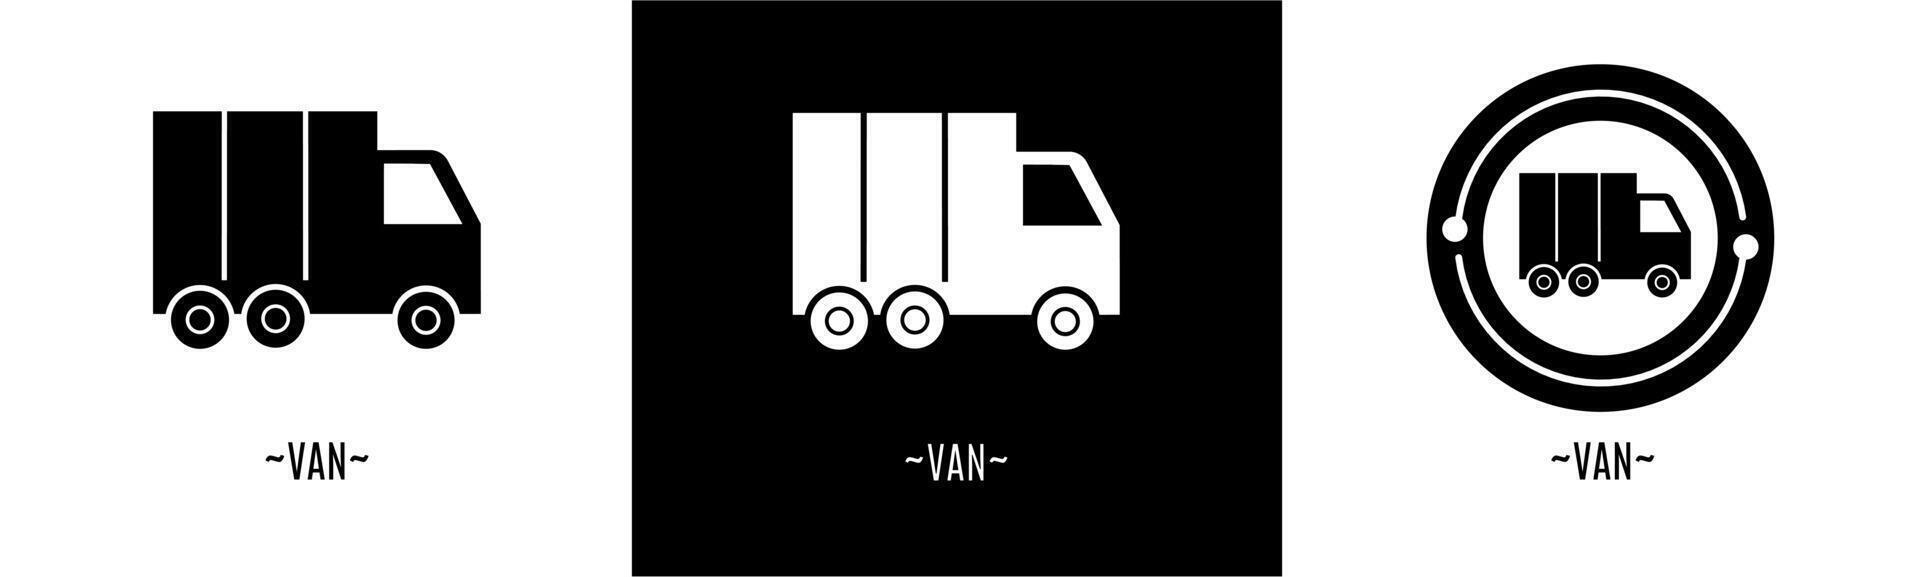 Van logo set. Collection of black and white logos. Stock vector. vector